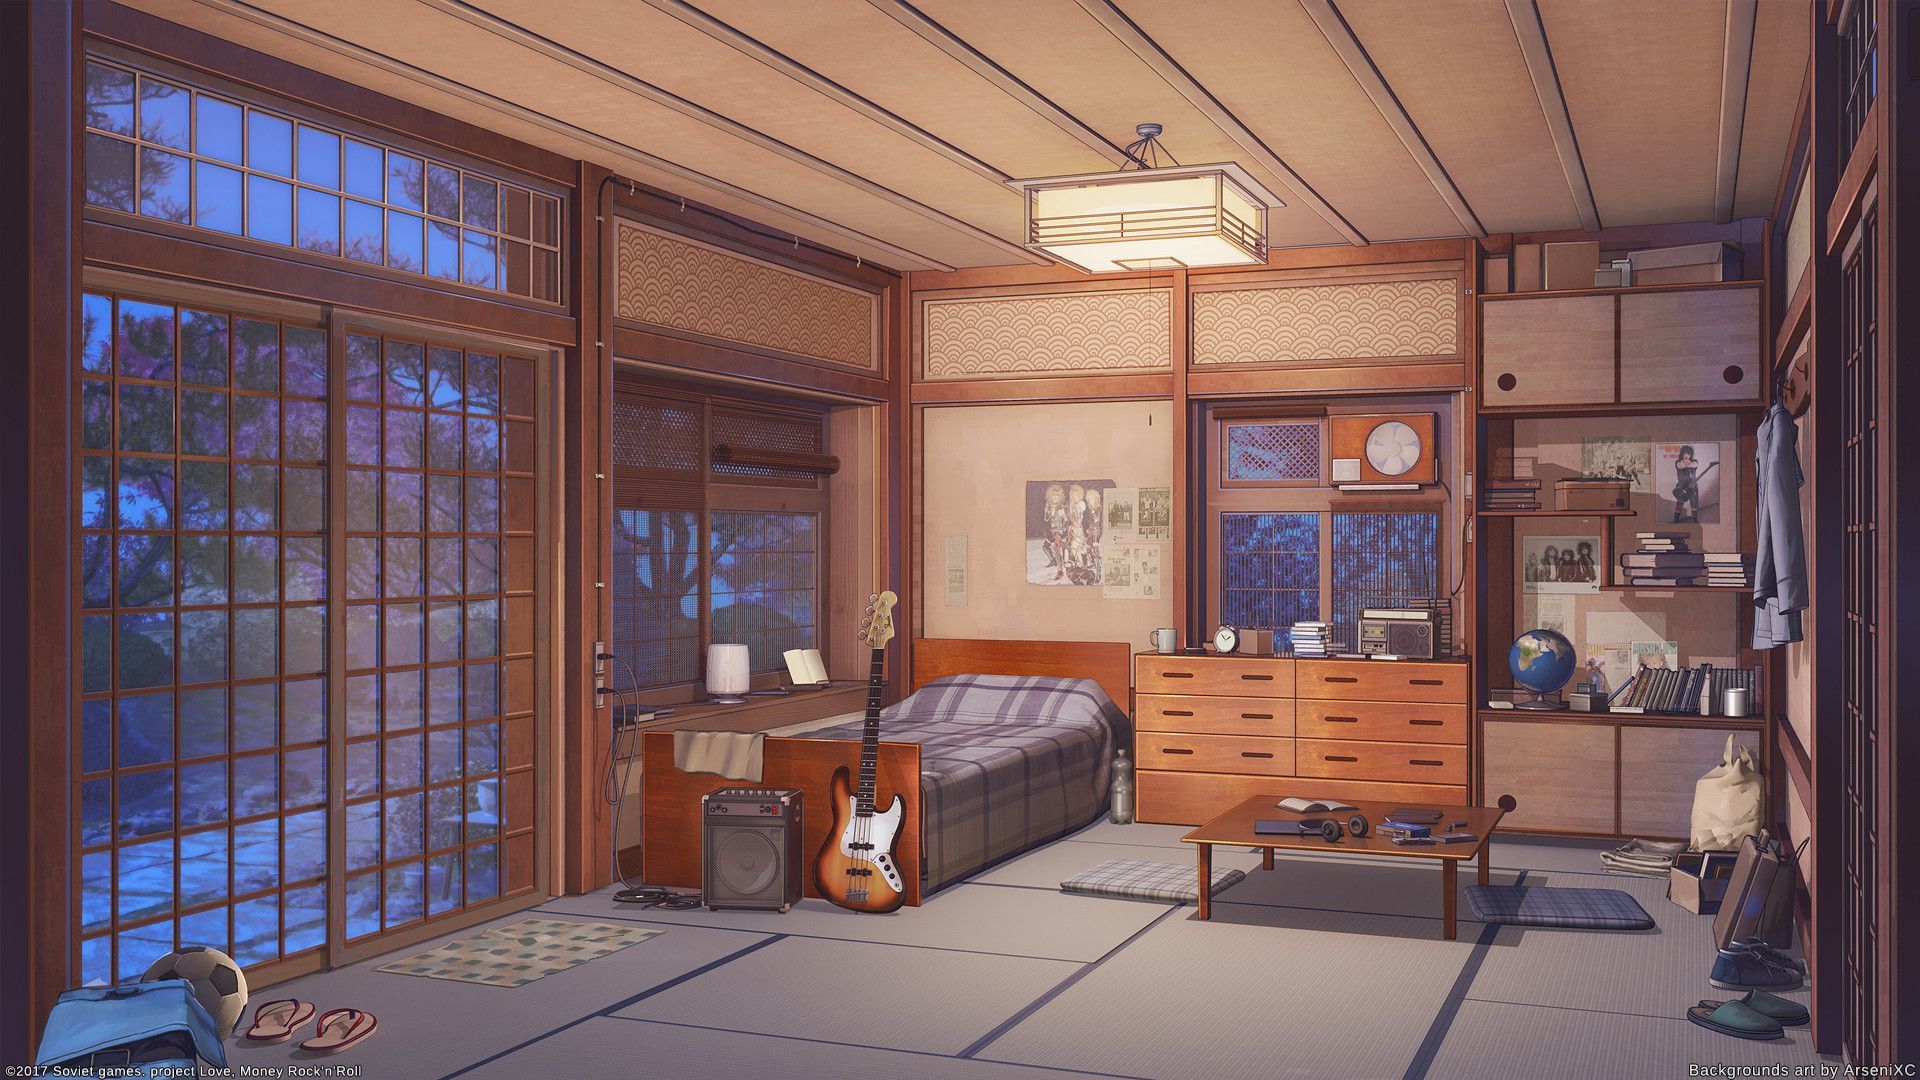 Himitsu house interior night version by arsenixc on DeviantArt